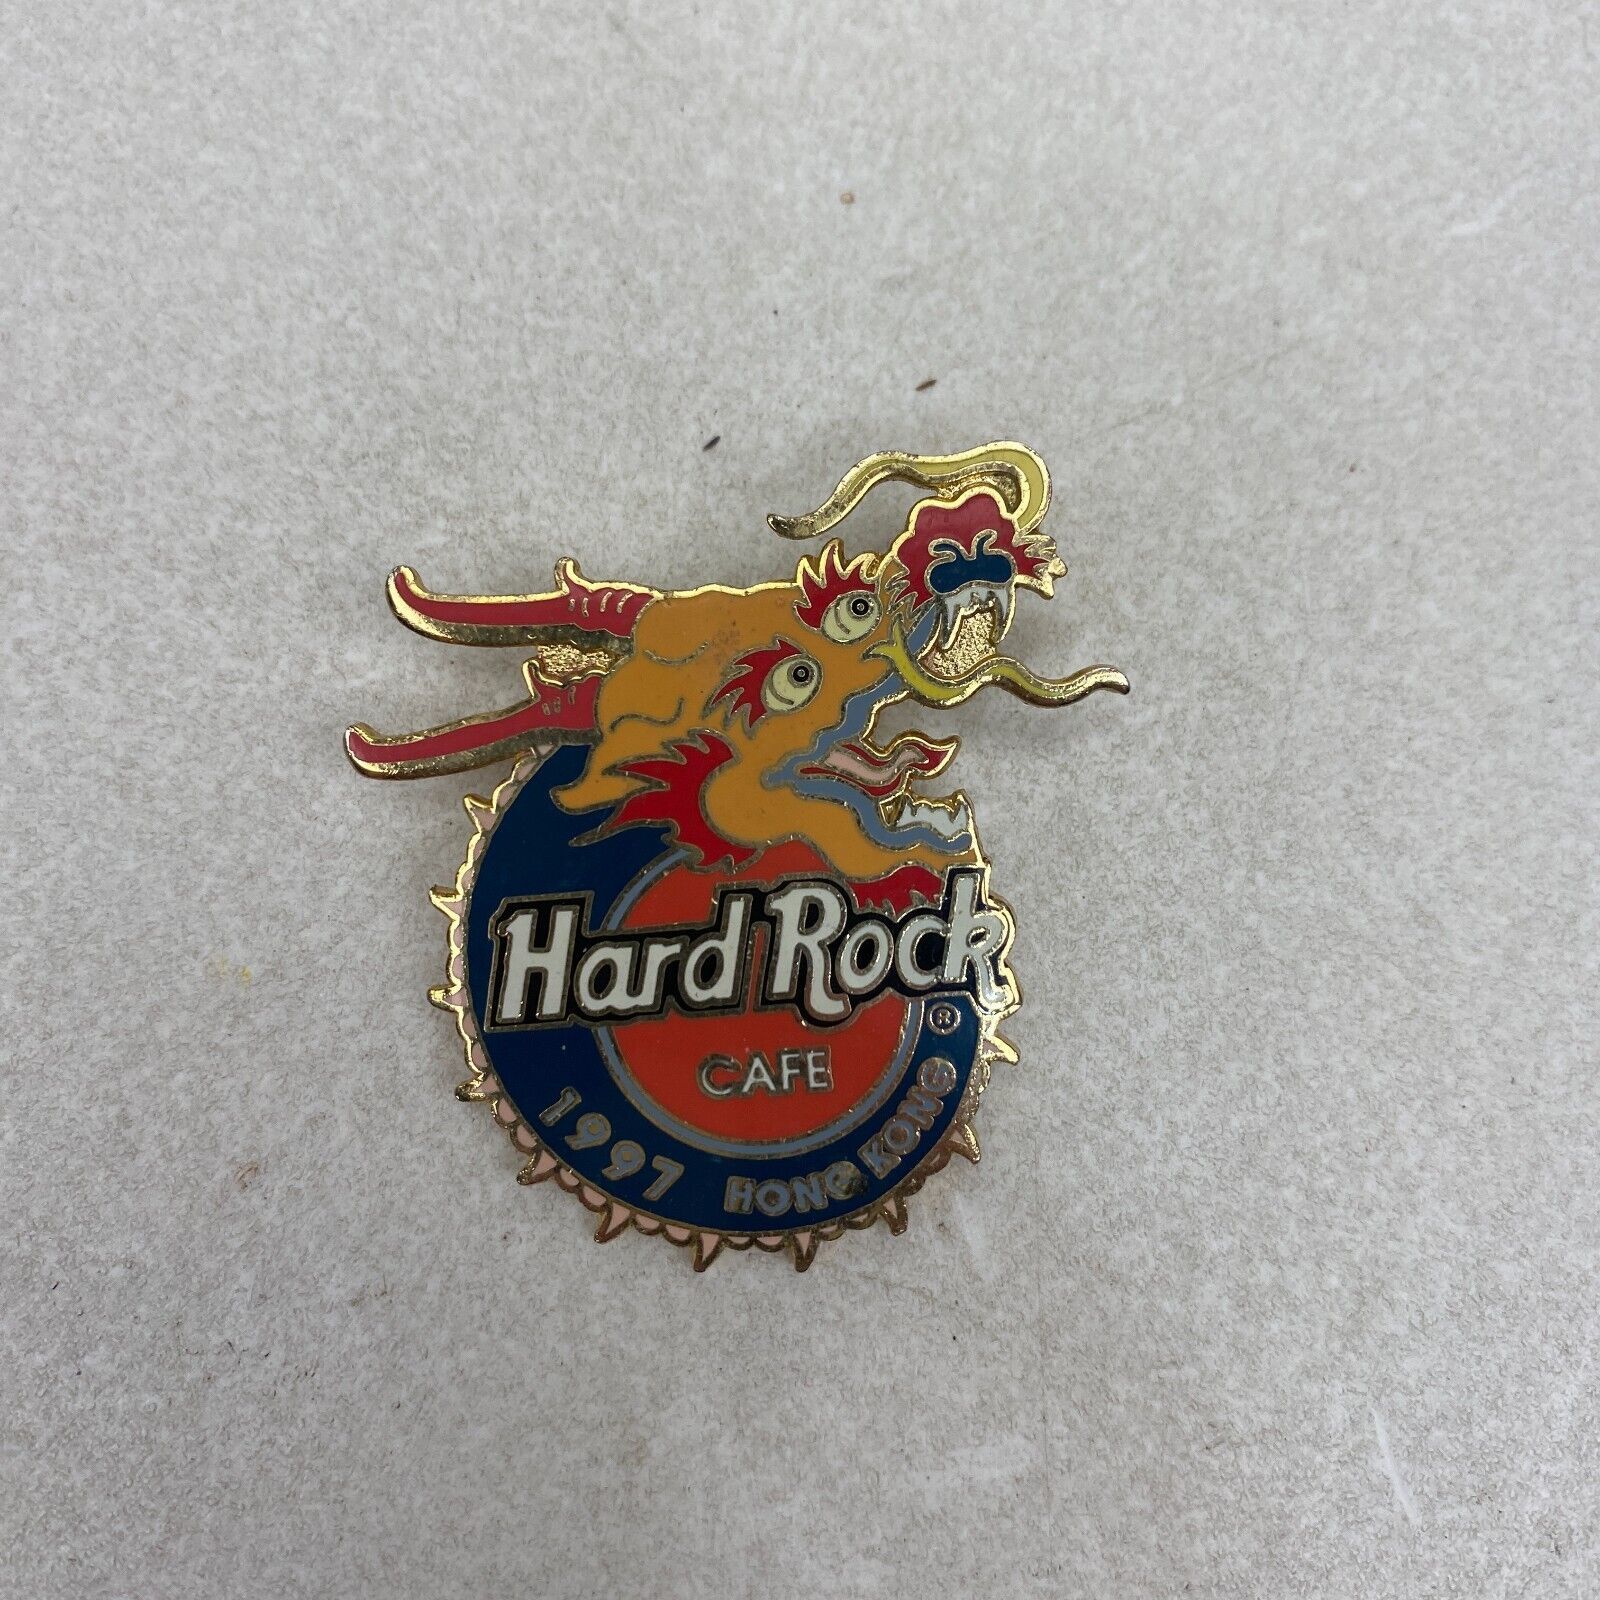 Hard Rock CAFE HONG KONG 1997 Vintage Jewelry Broach Enamel Lapel Pin Pinback - £5.30 GBP